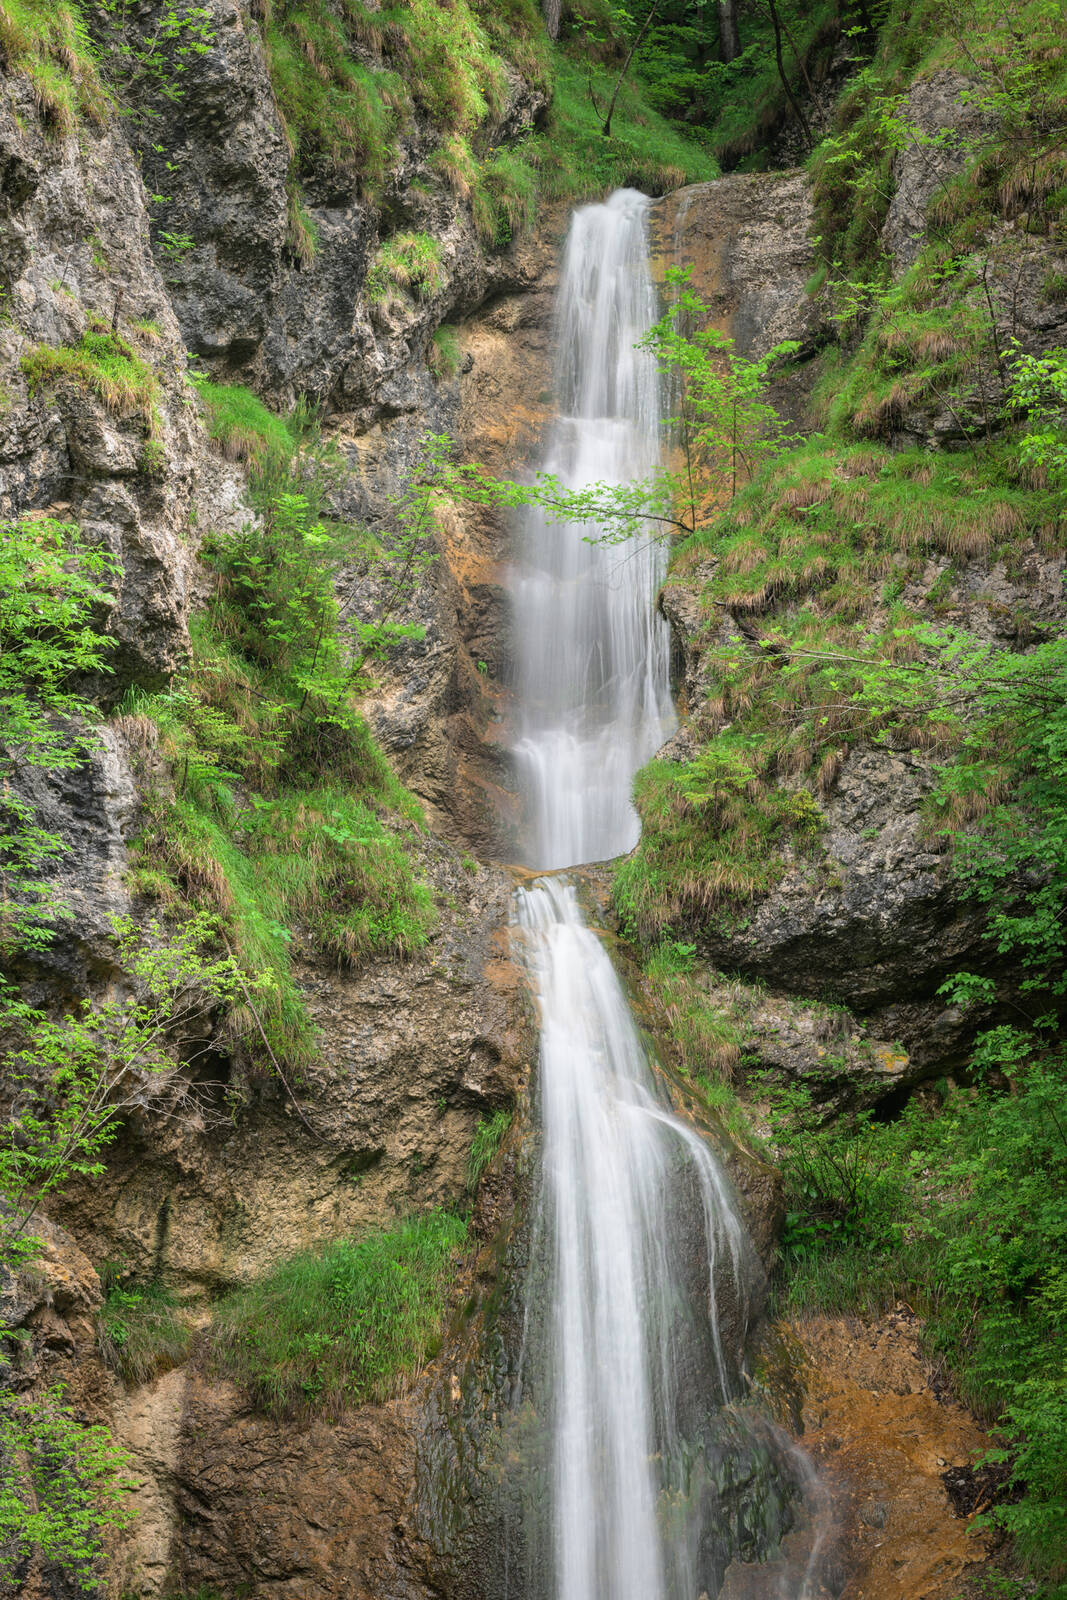 Image of Repov Slap (Rep Waterfall) by Luka Esenko